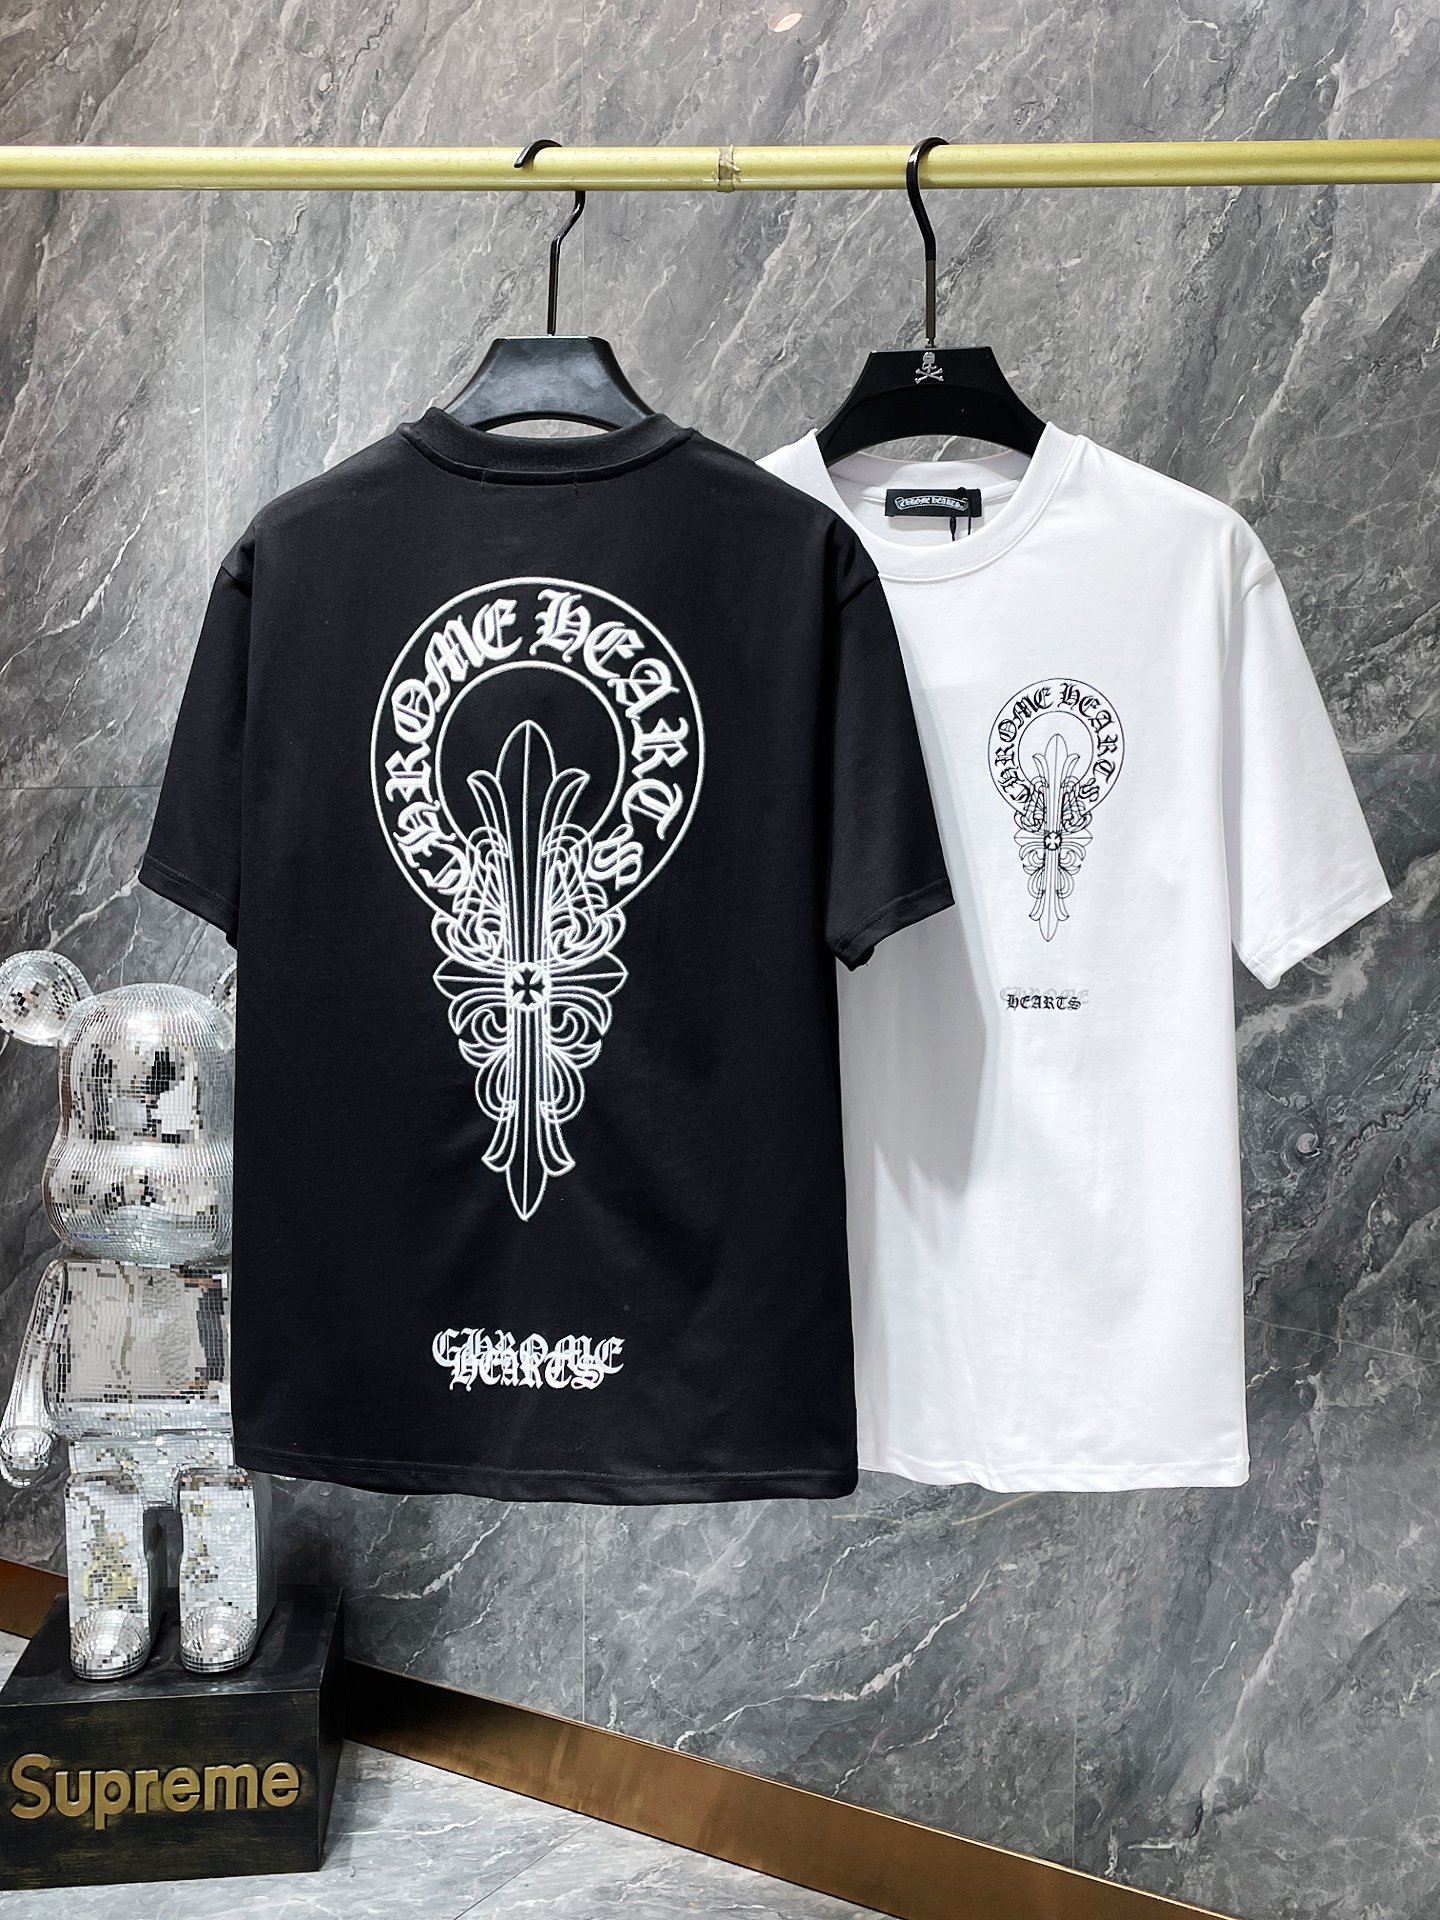 Chrome Hearts Clothing T-Shirt Perfect Quality Designer Replica
 Black White Short Sleeve